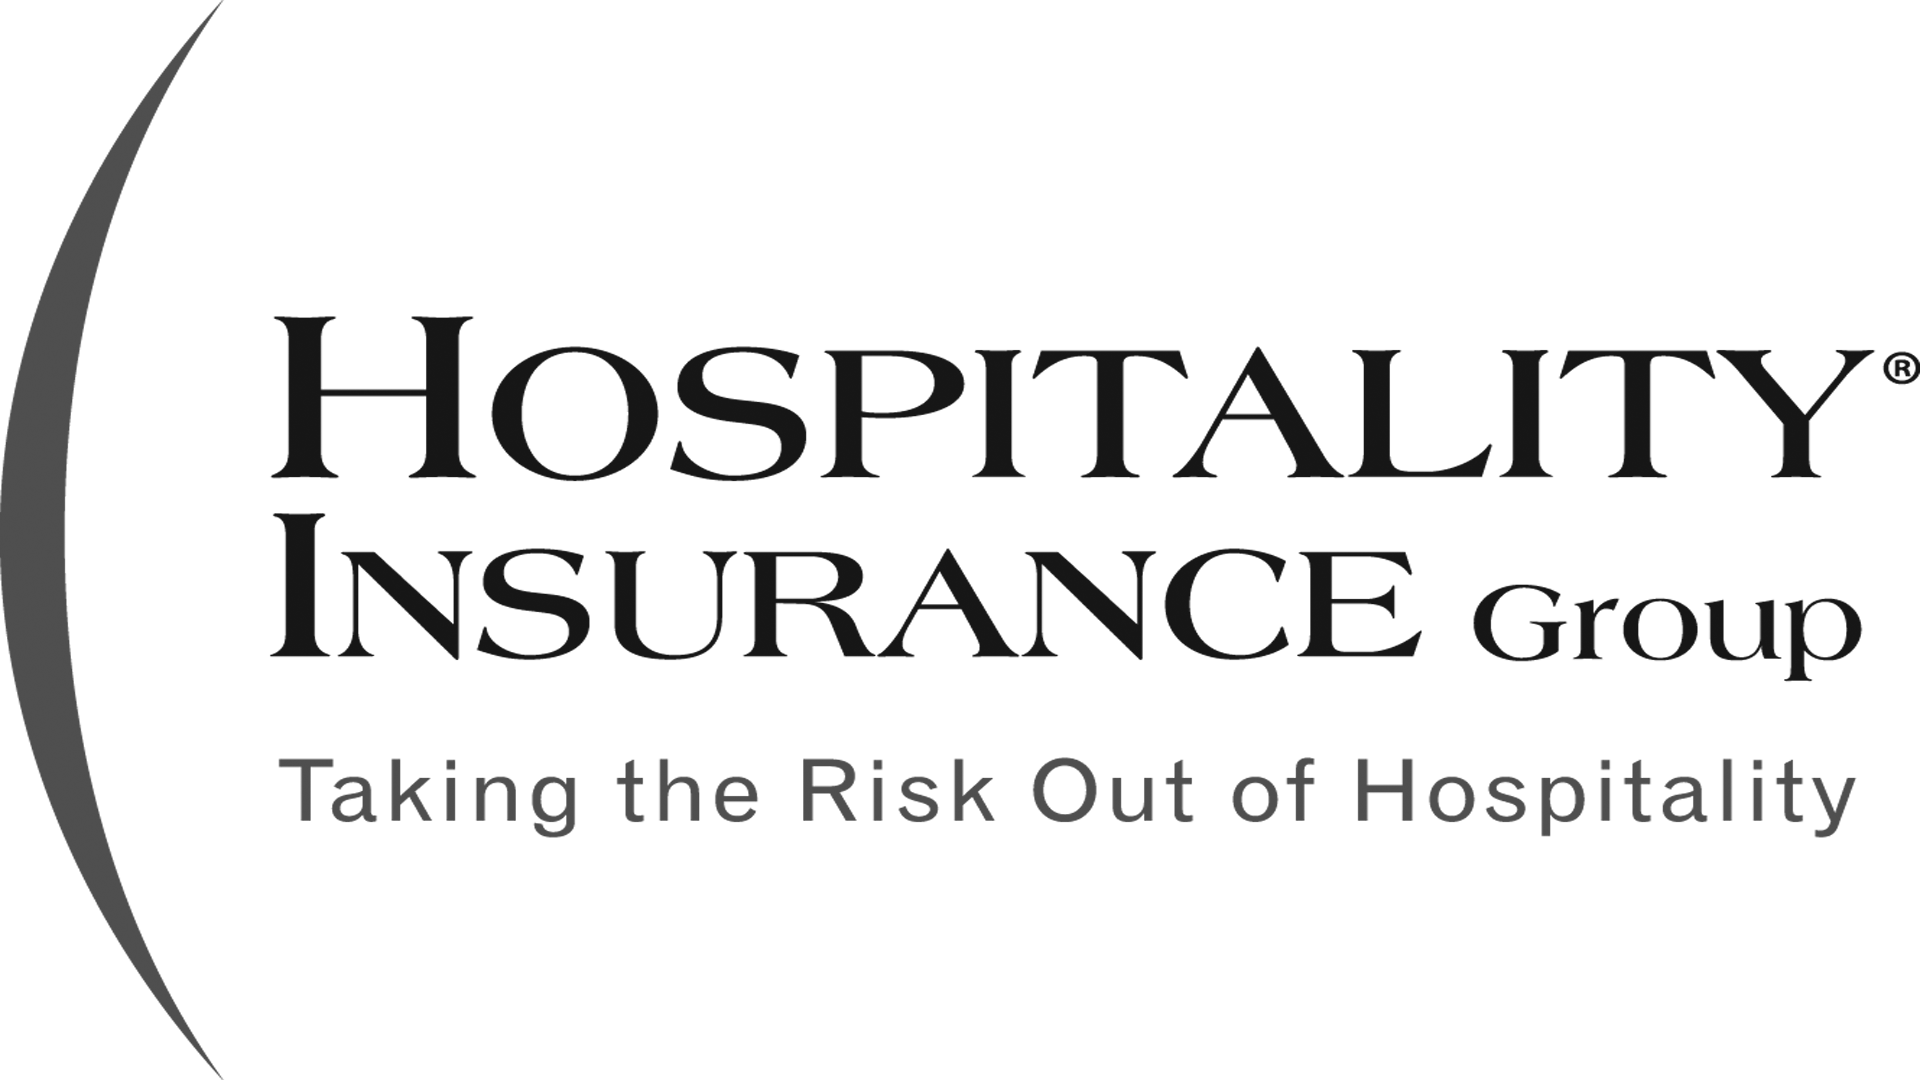 Hospitality Insurance Group